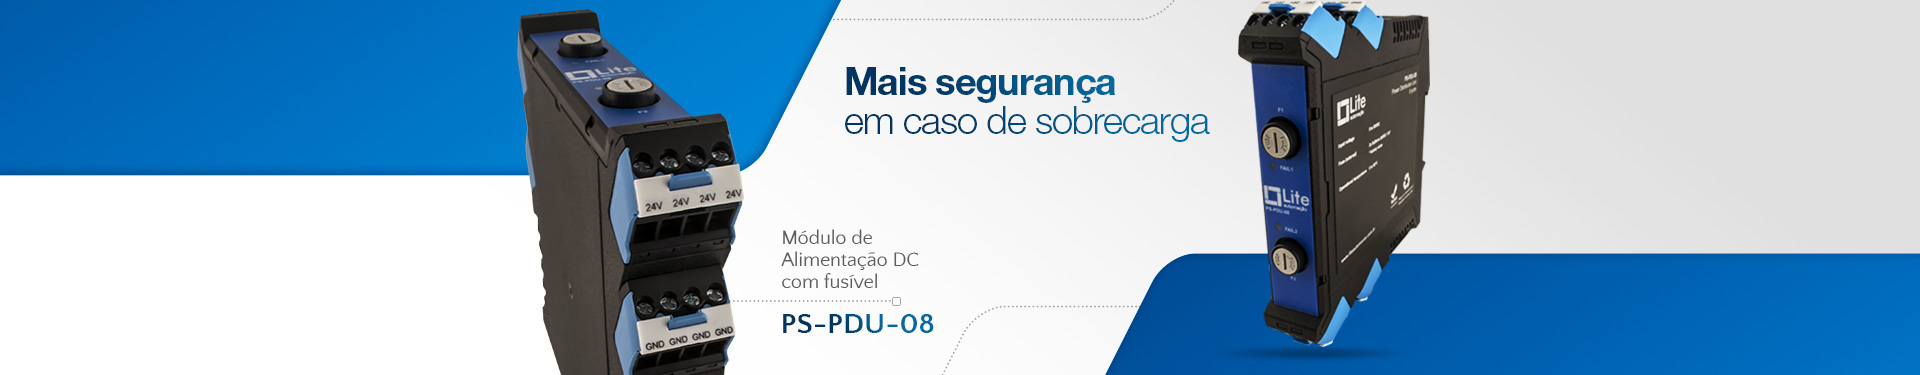 Banner Conteudo PS-PDU-08_2